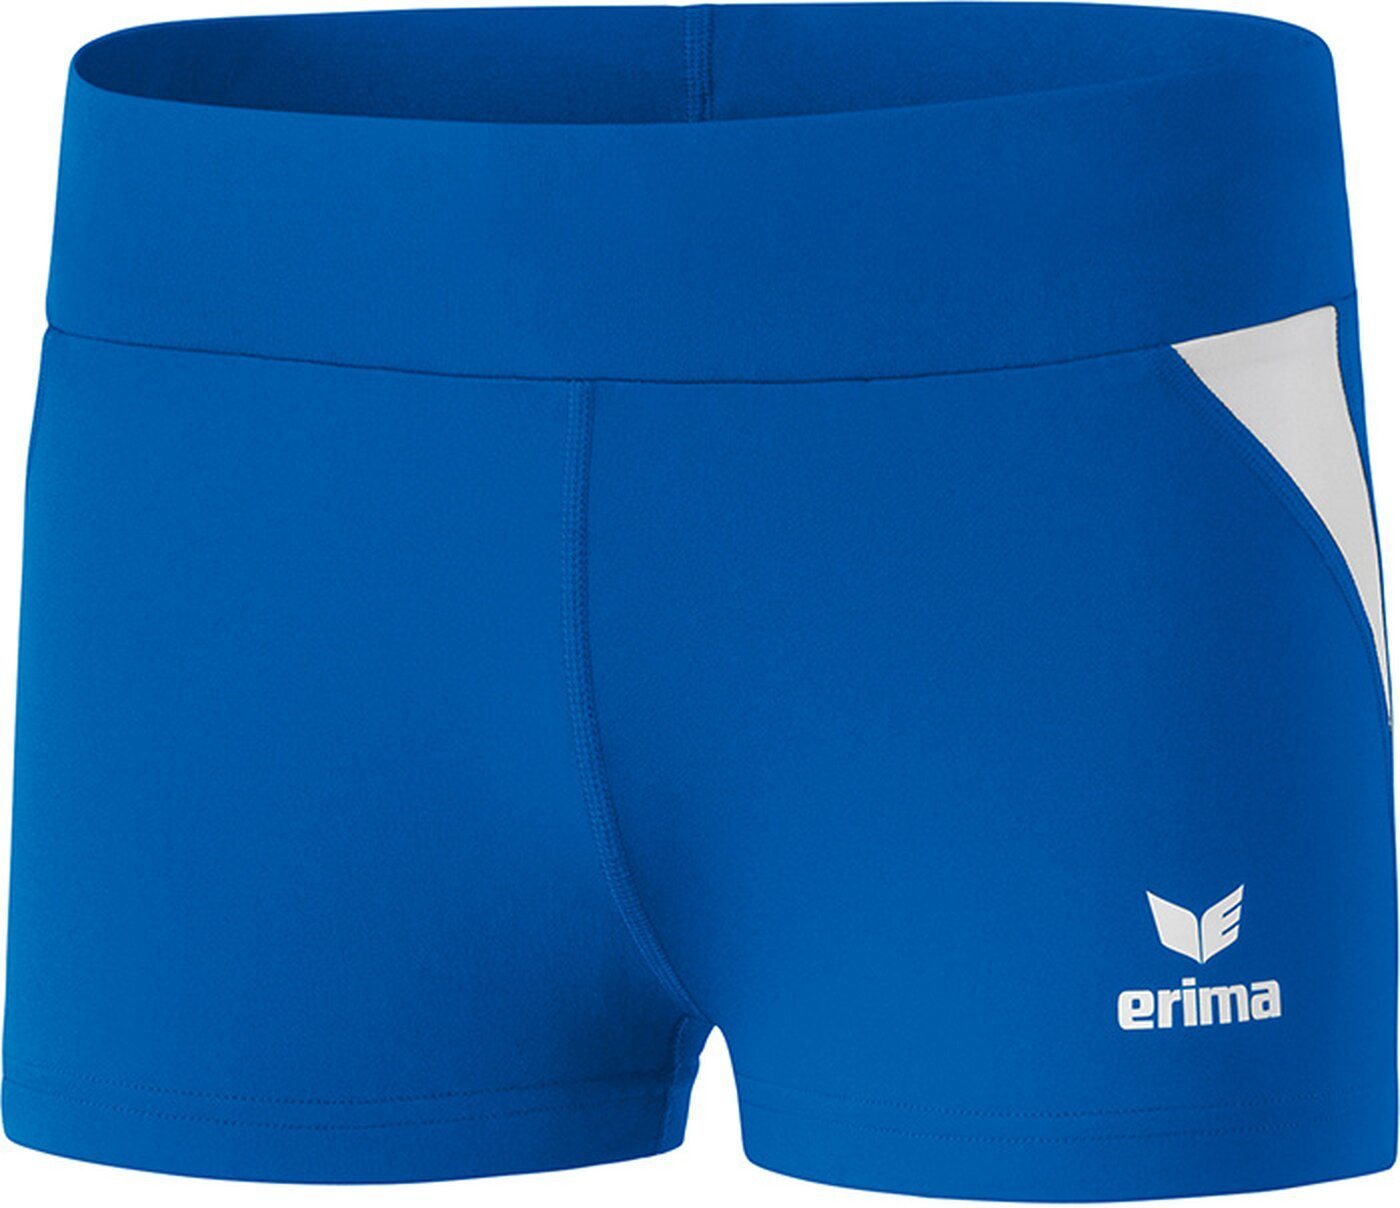 Erima Trainingstights athletic hot pants ›  - Onlineshop OTTO